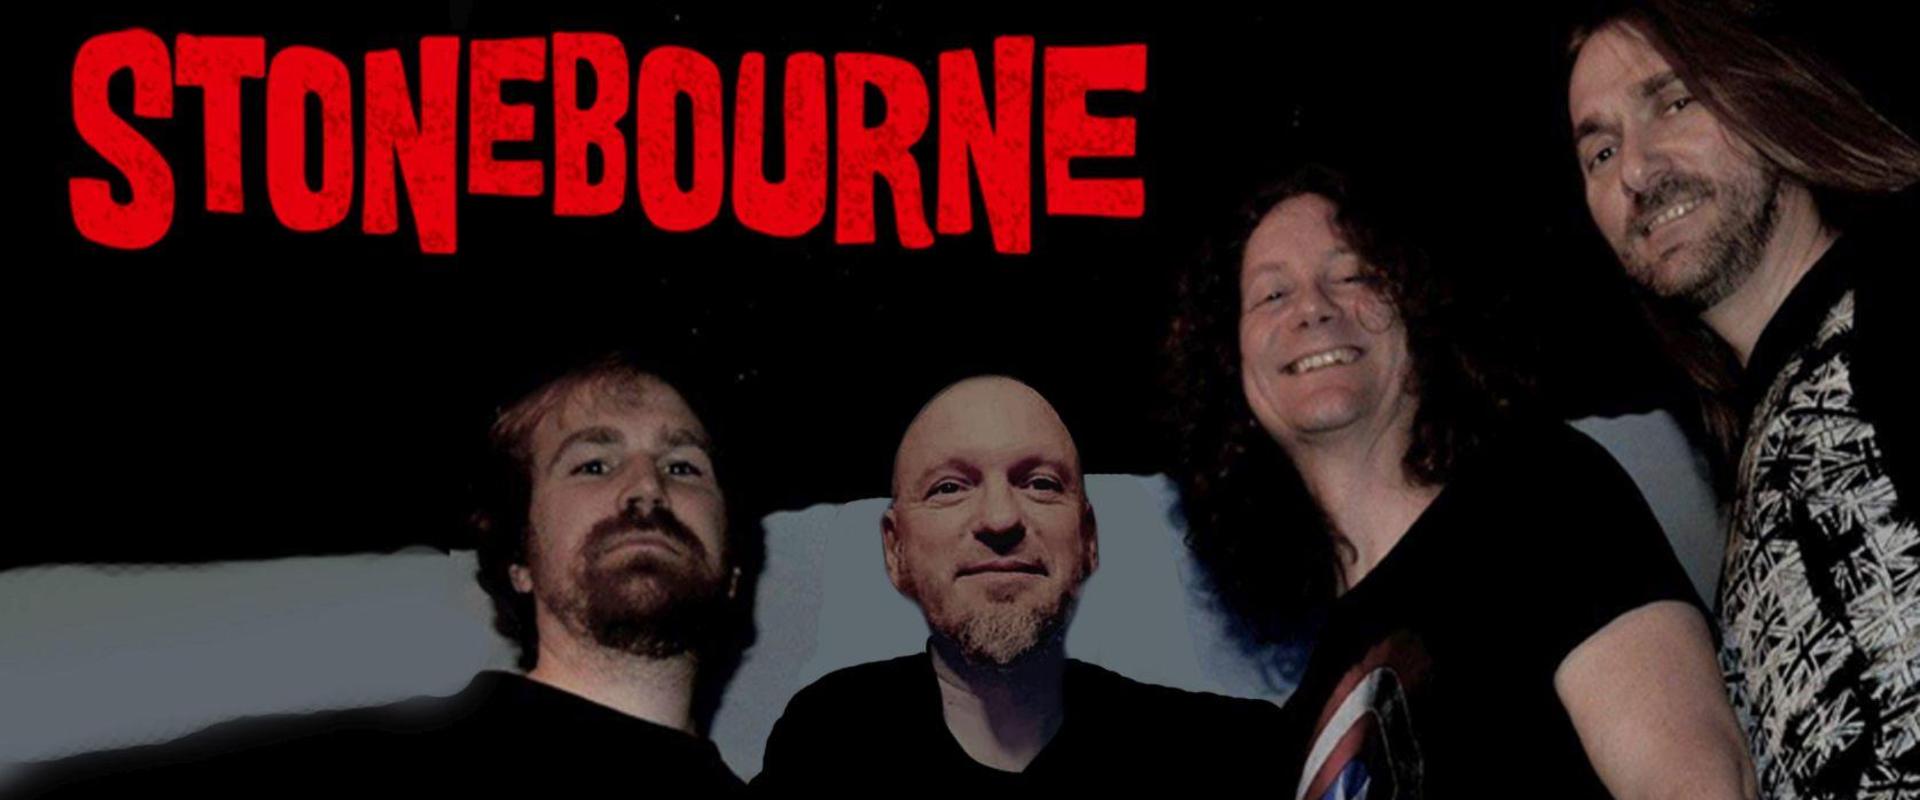 Band: Stonebourne (Rock)